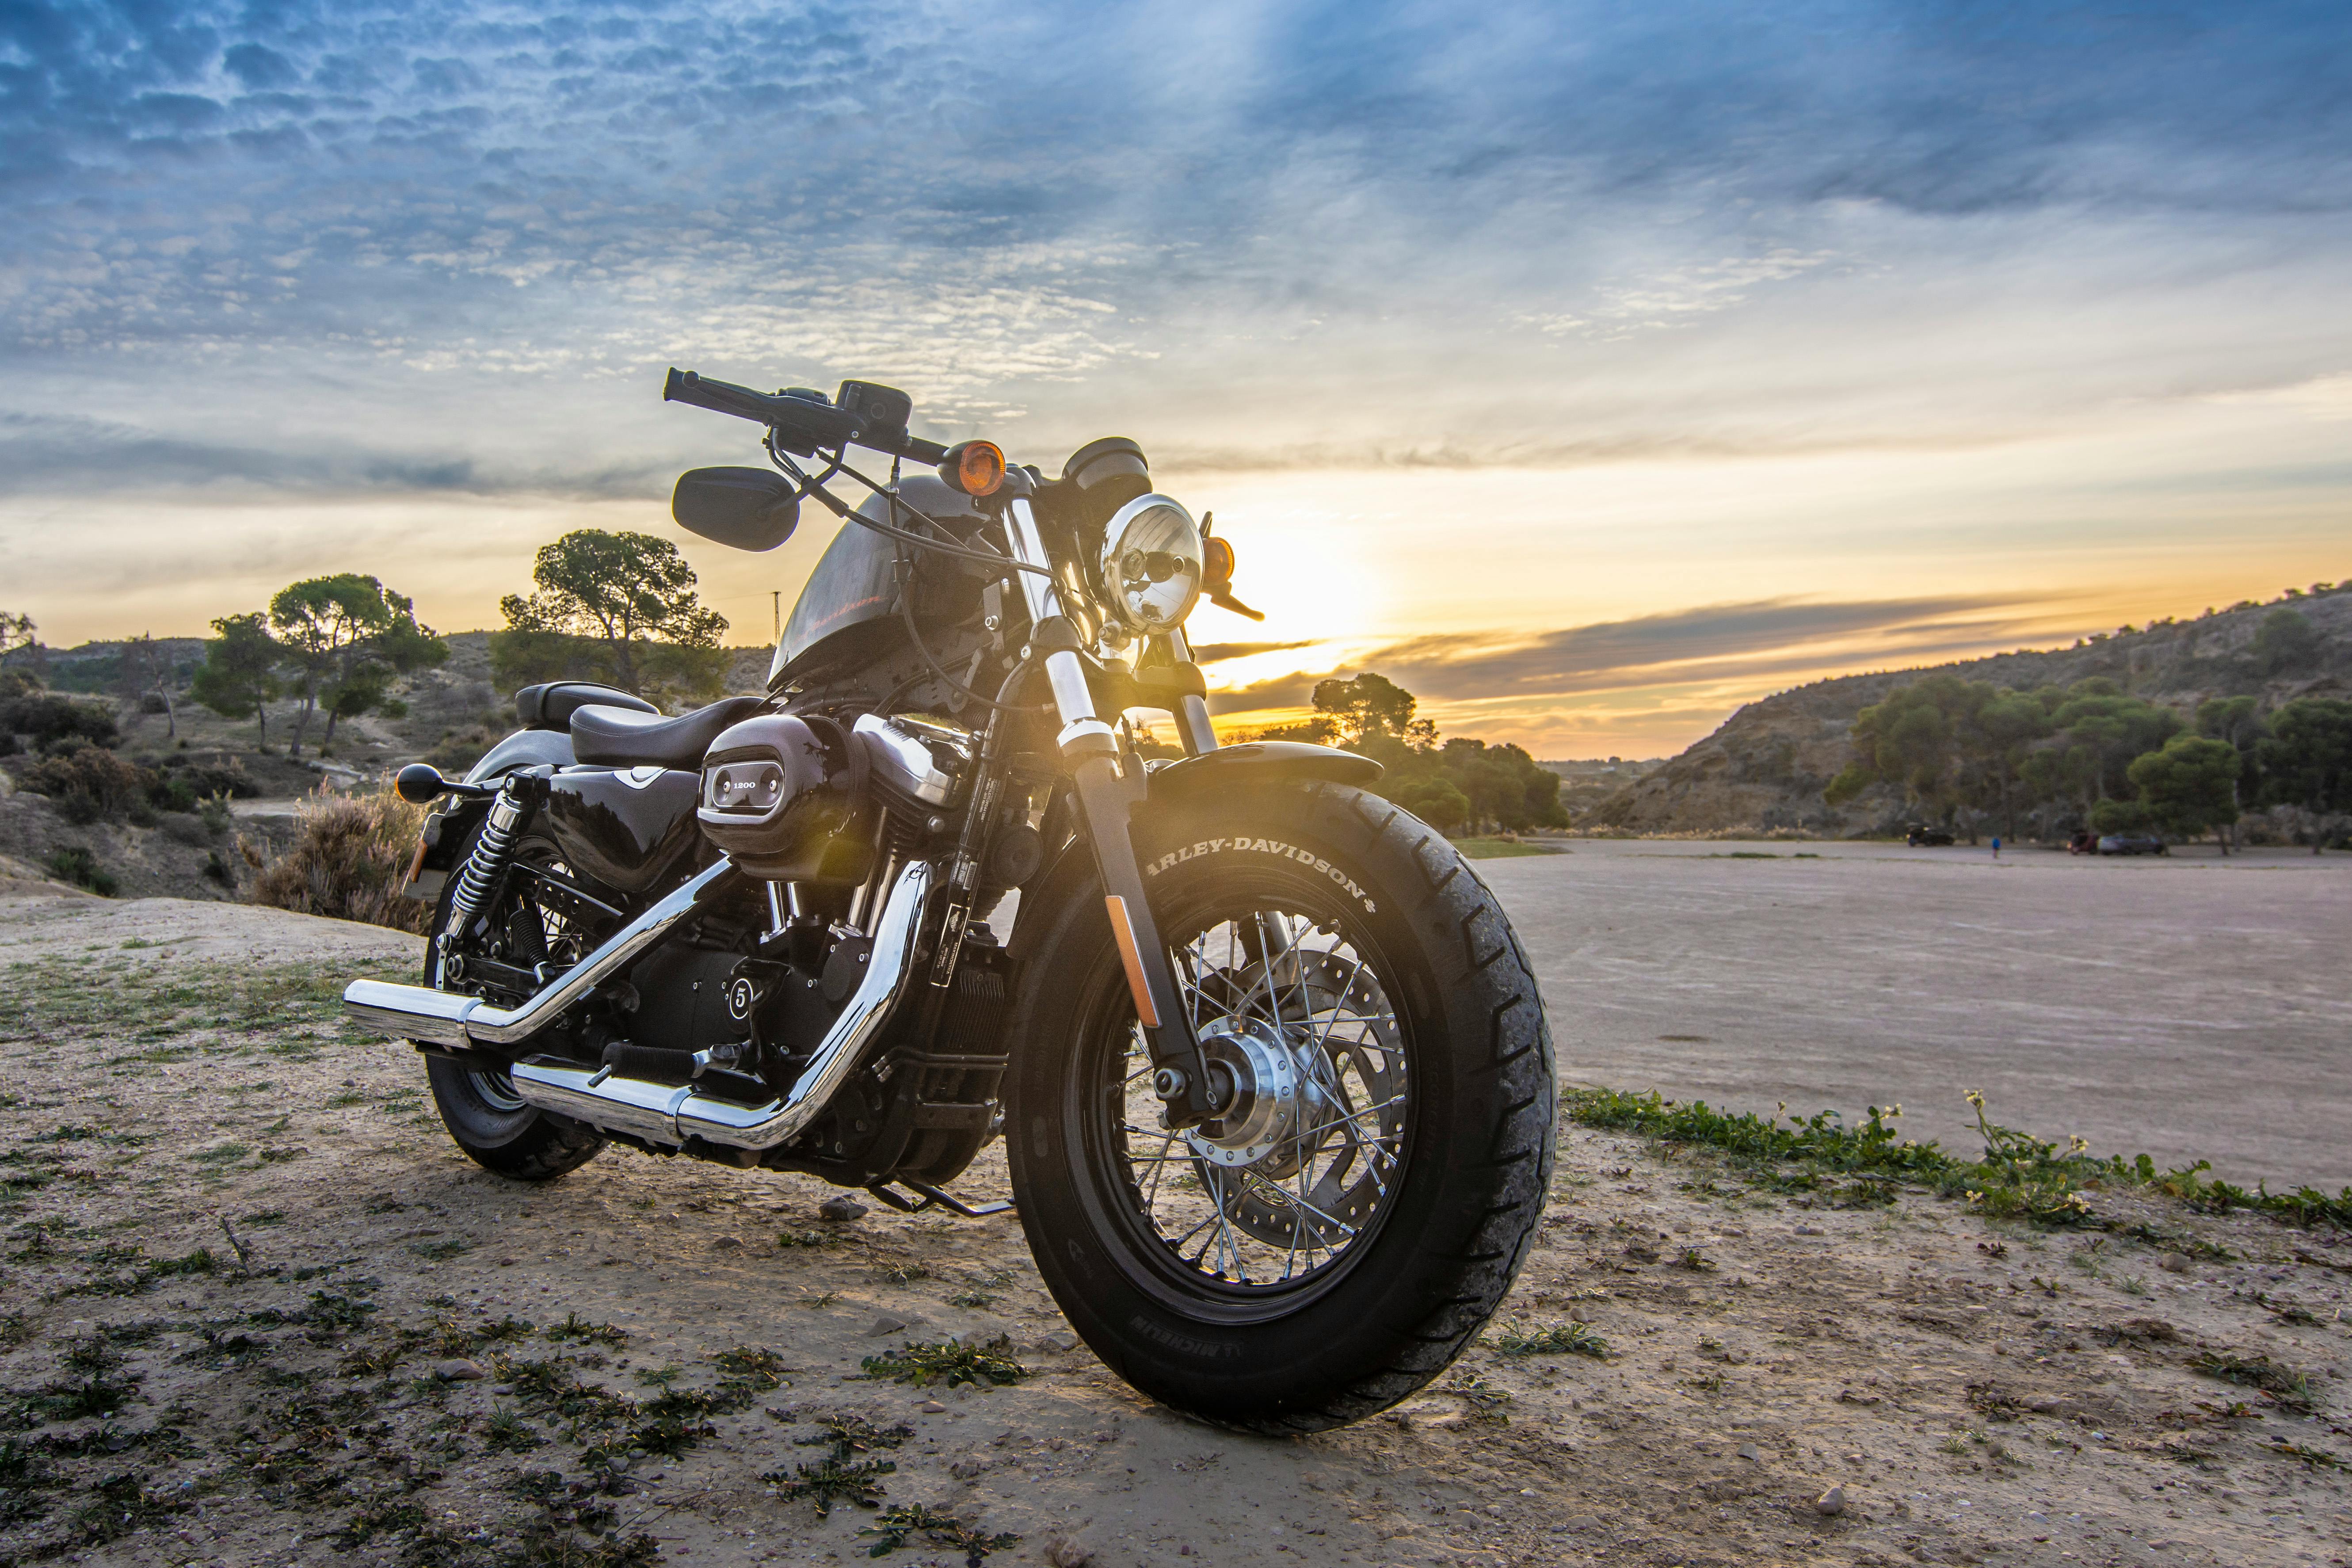 Top 999+ Harley Davidson Wallpaper Full HD, 4K✓Free to Use